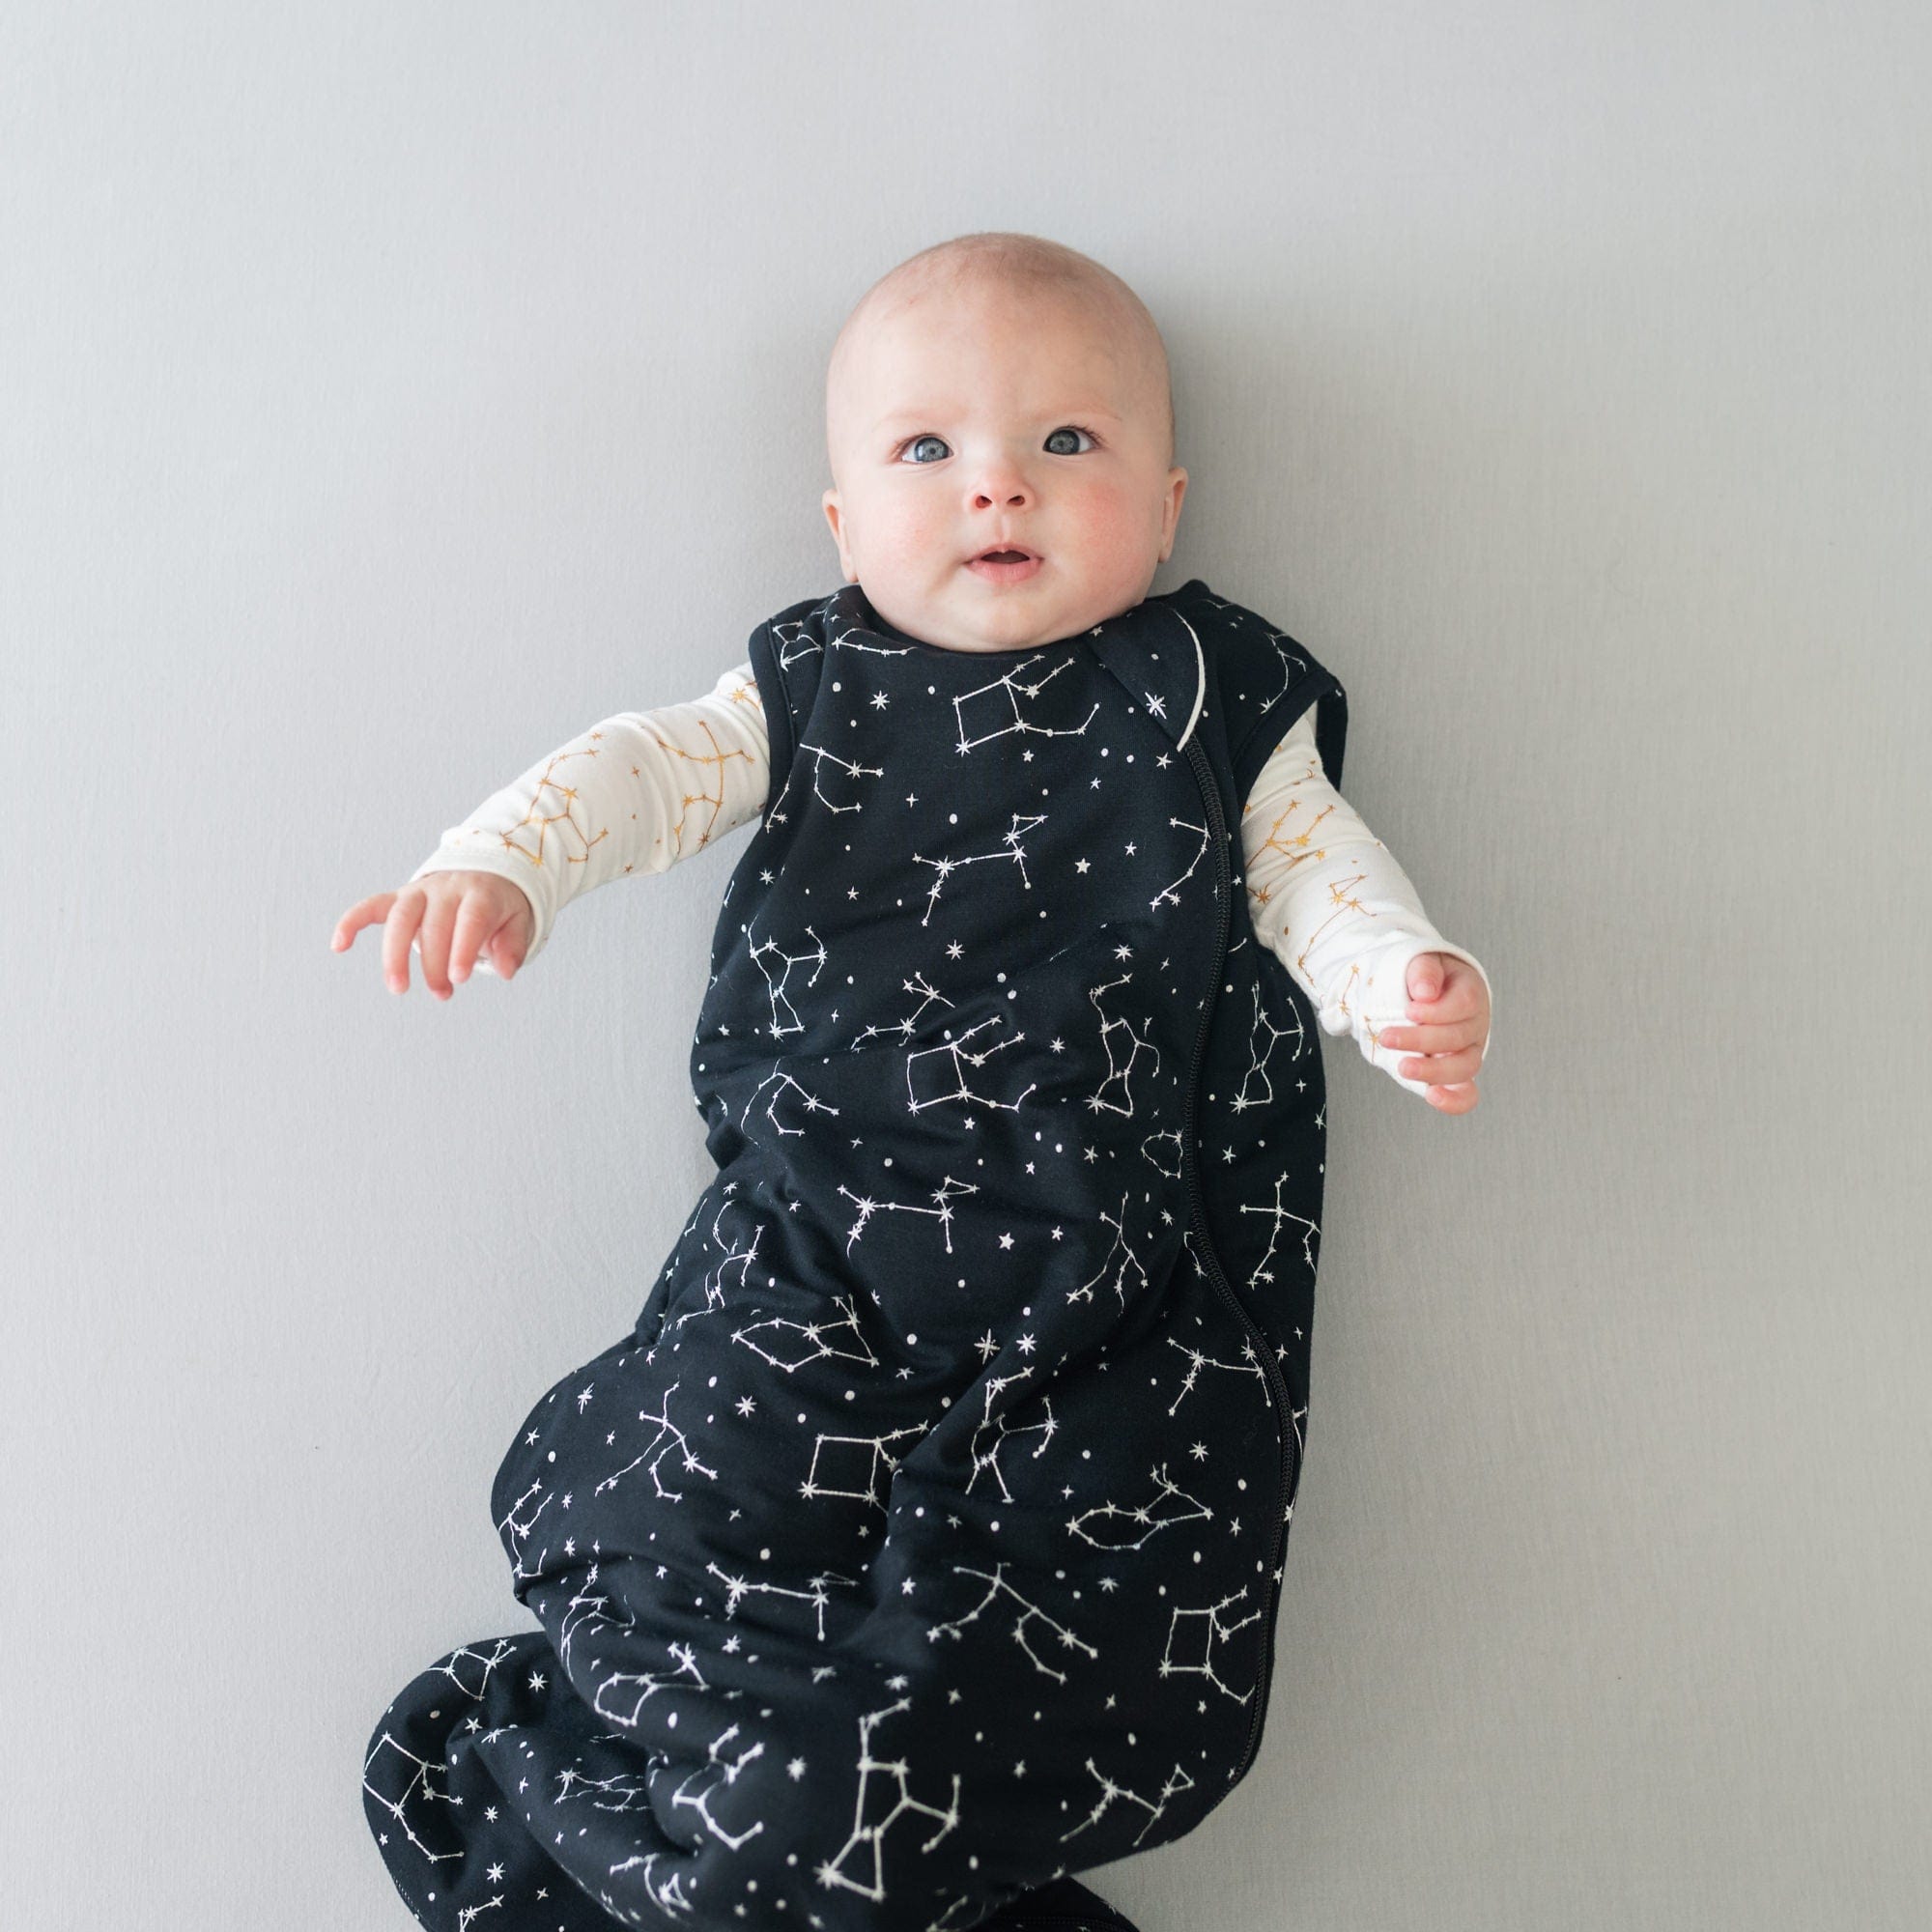 Infant wearing Kyte Baby Sleep Bag Midnight Constellations 1.0